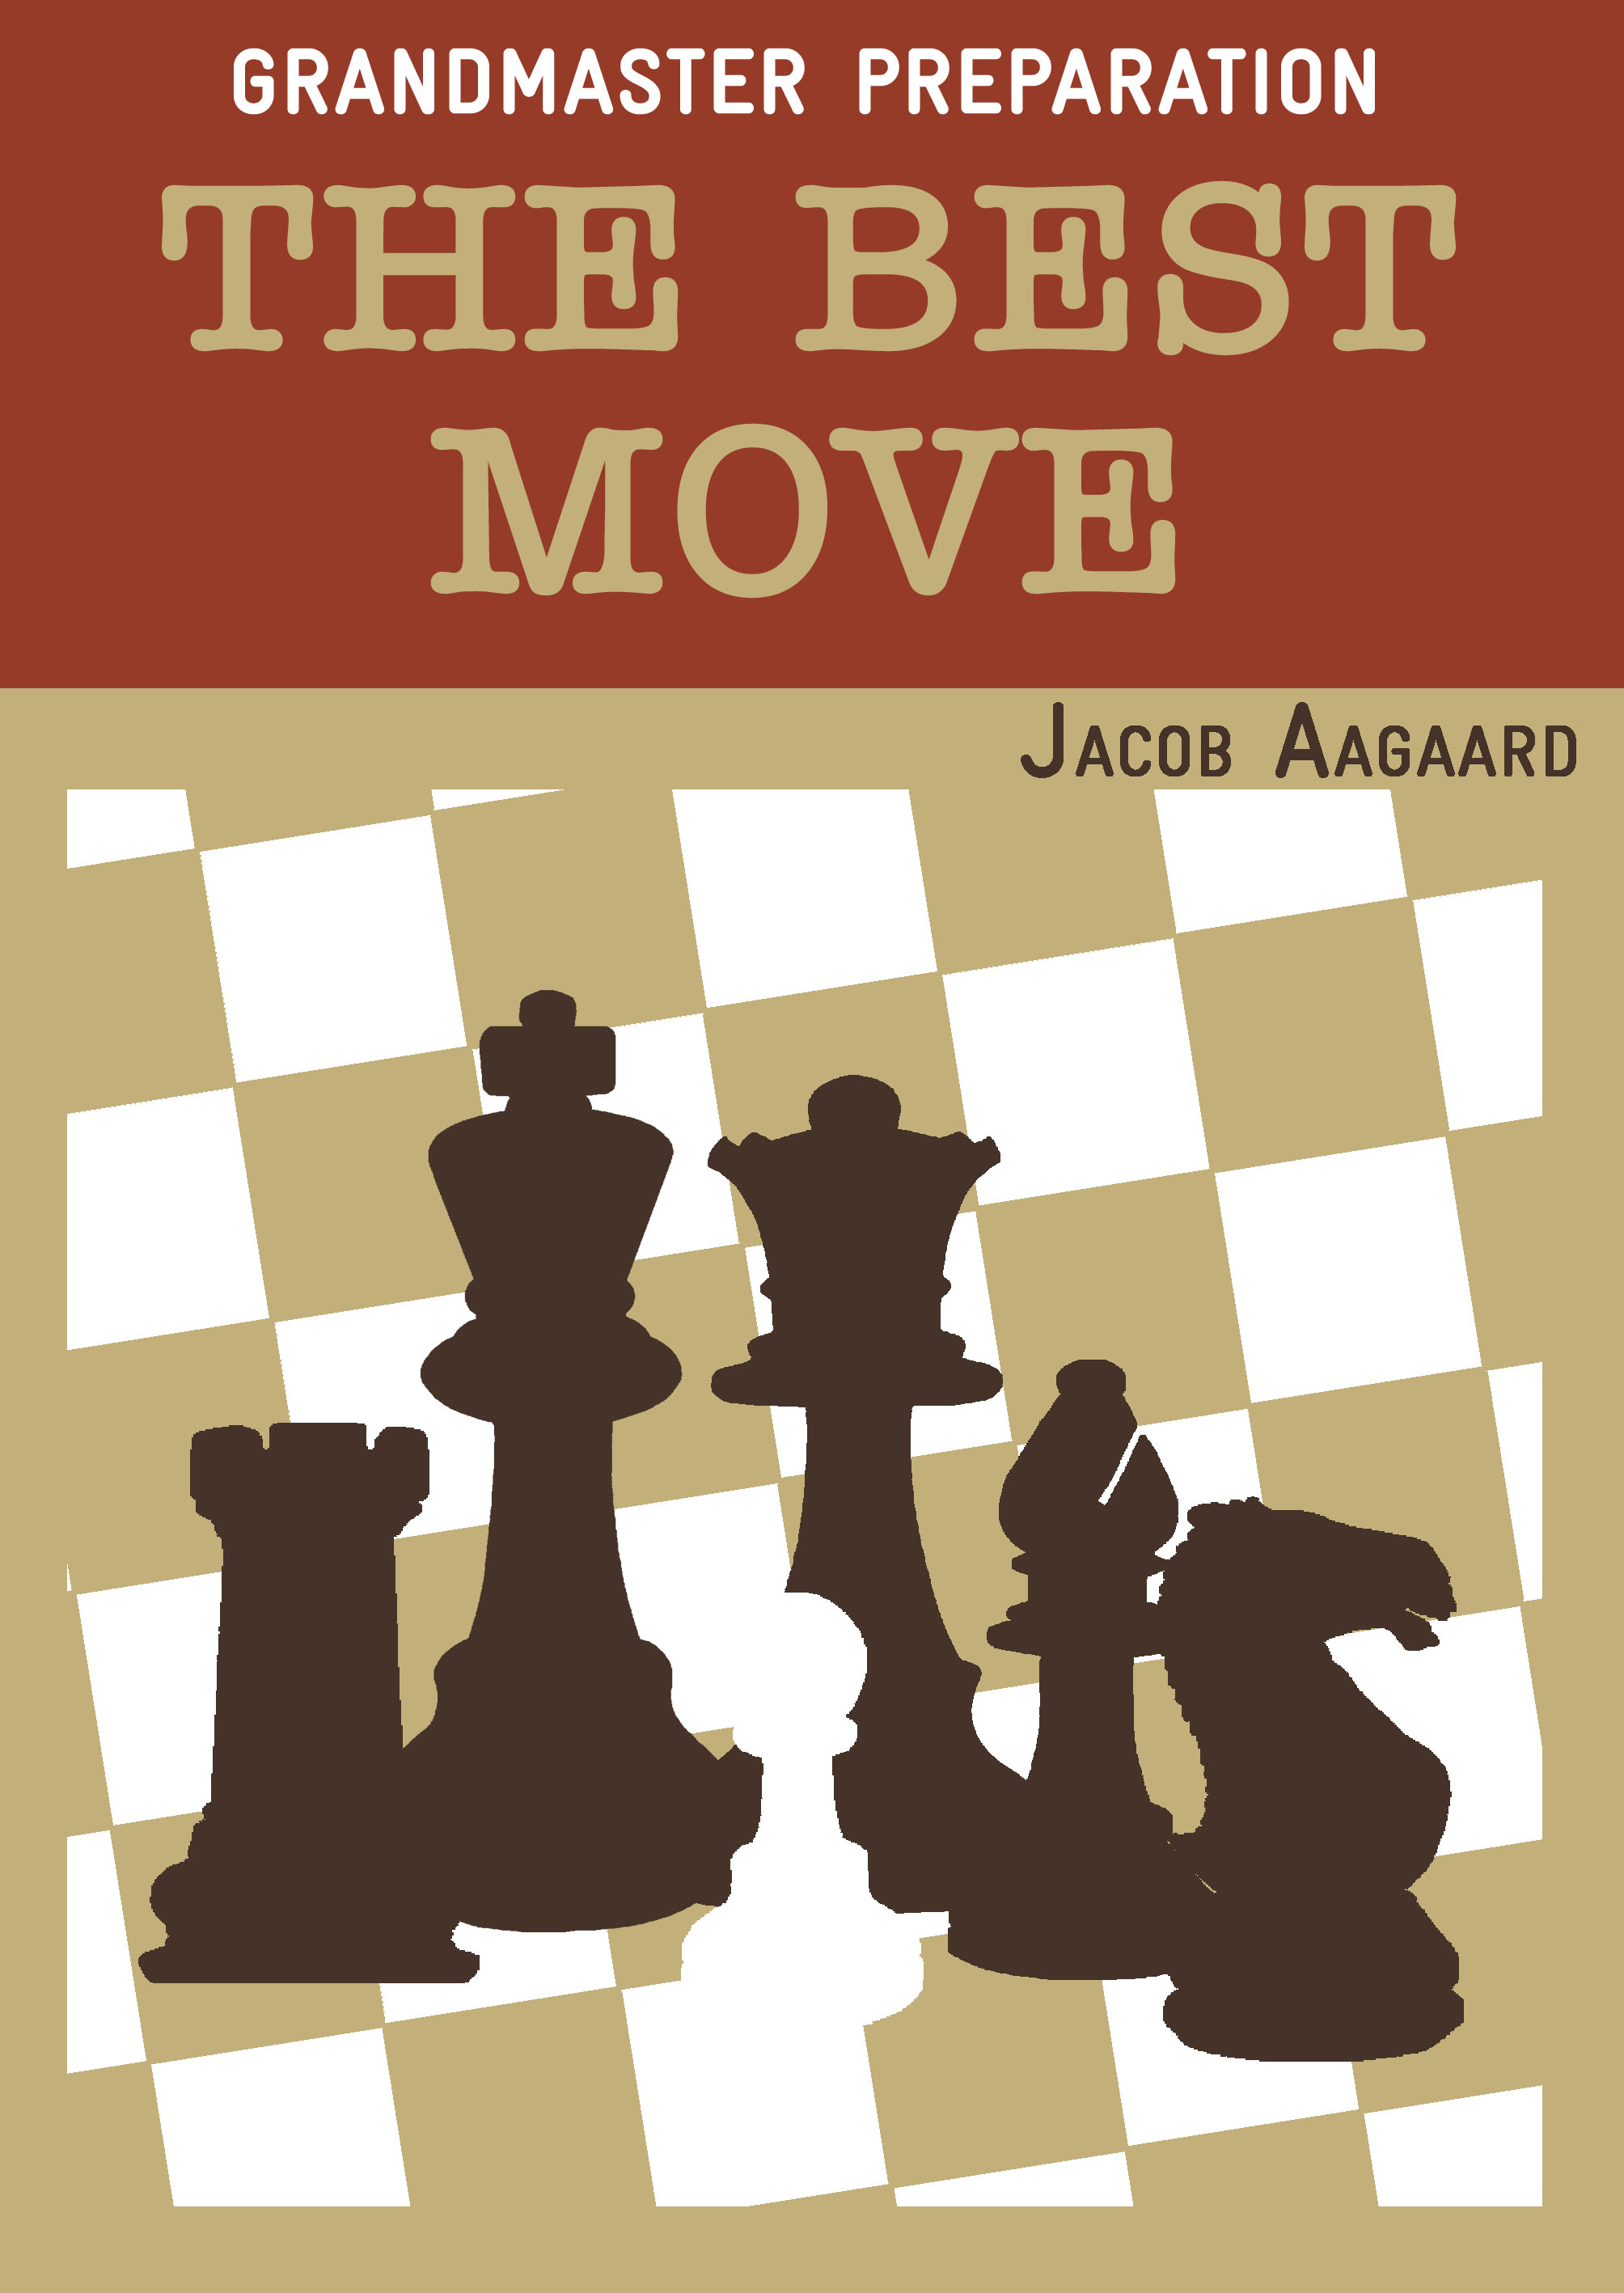 New Chess Series: 1.e4 A Complete White Repertoire by GM Jon Ludvig Hammer